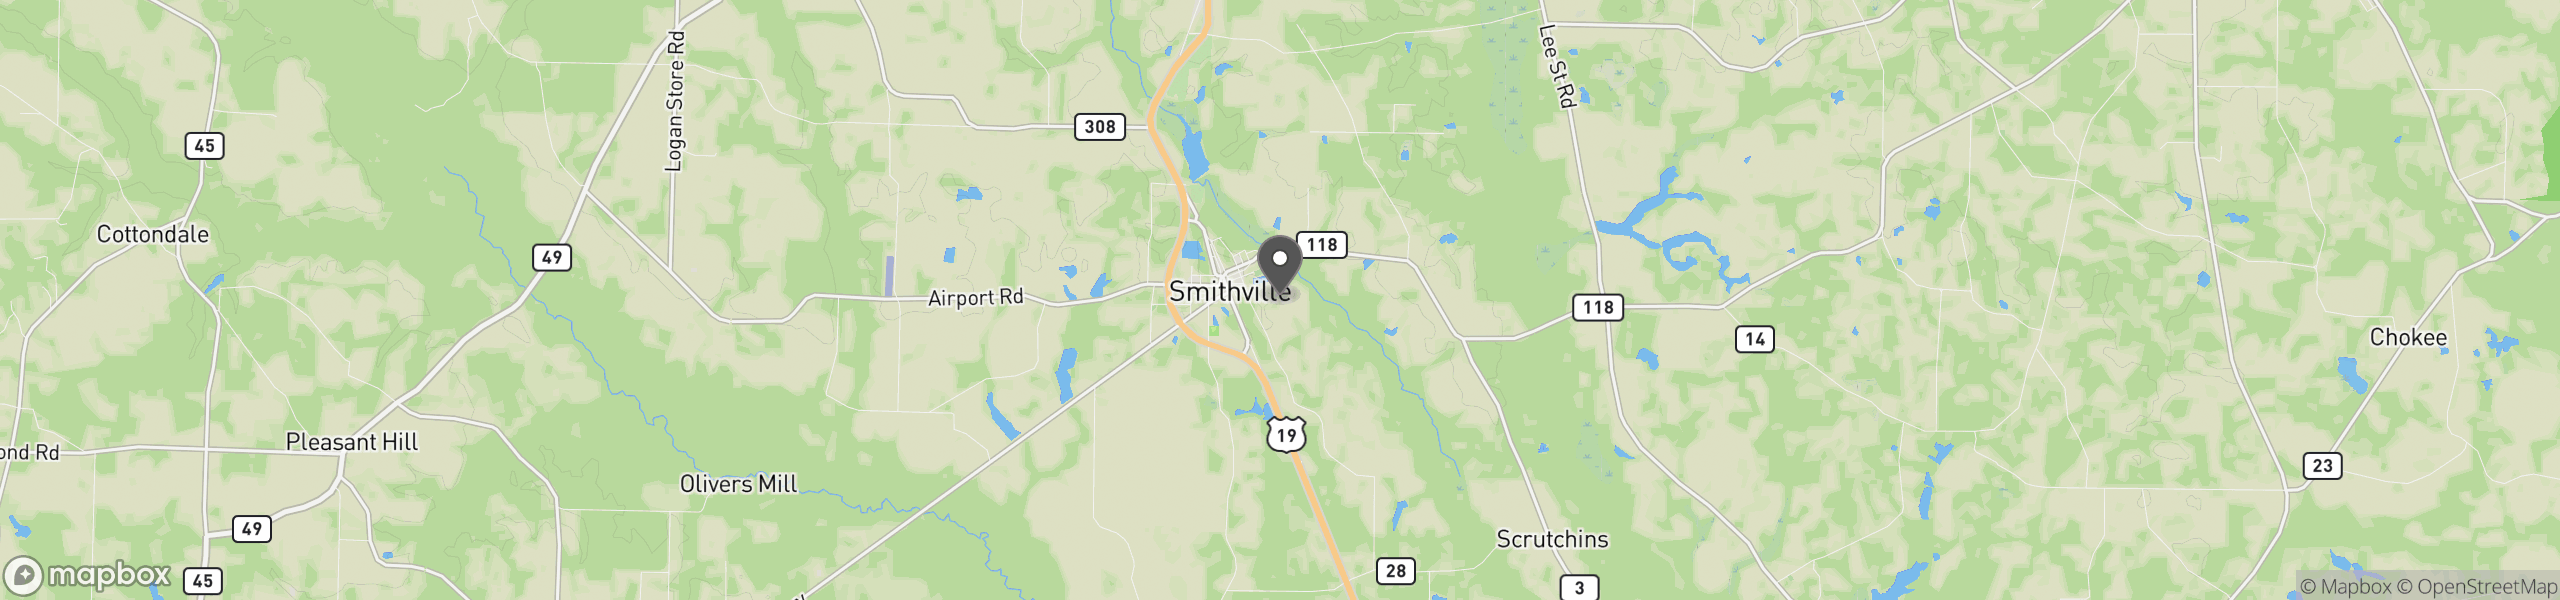 Smithville, GA 31787